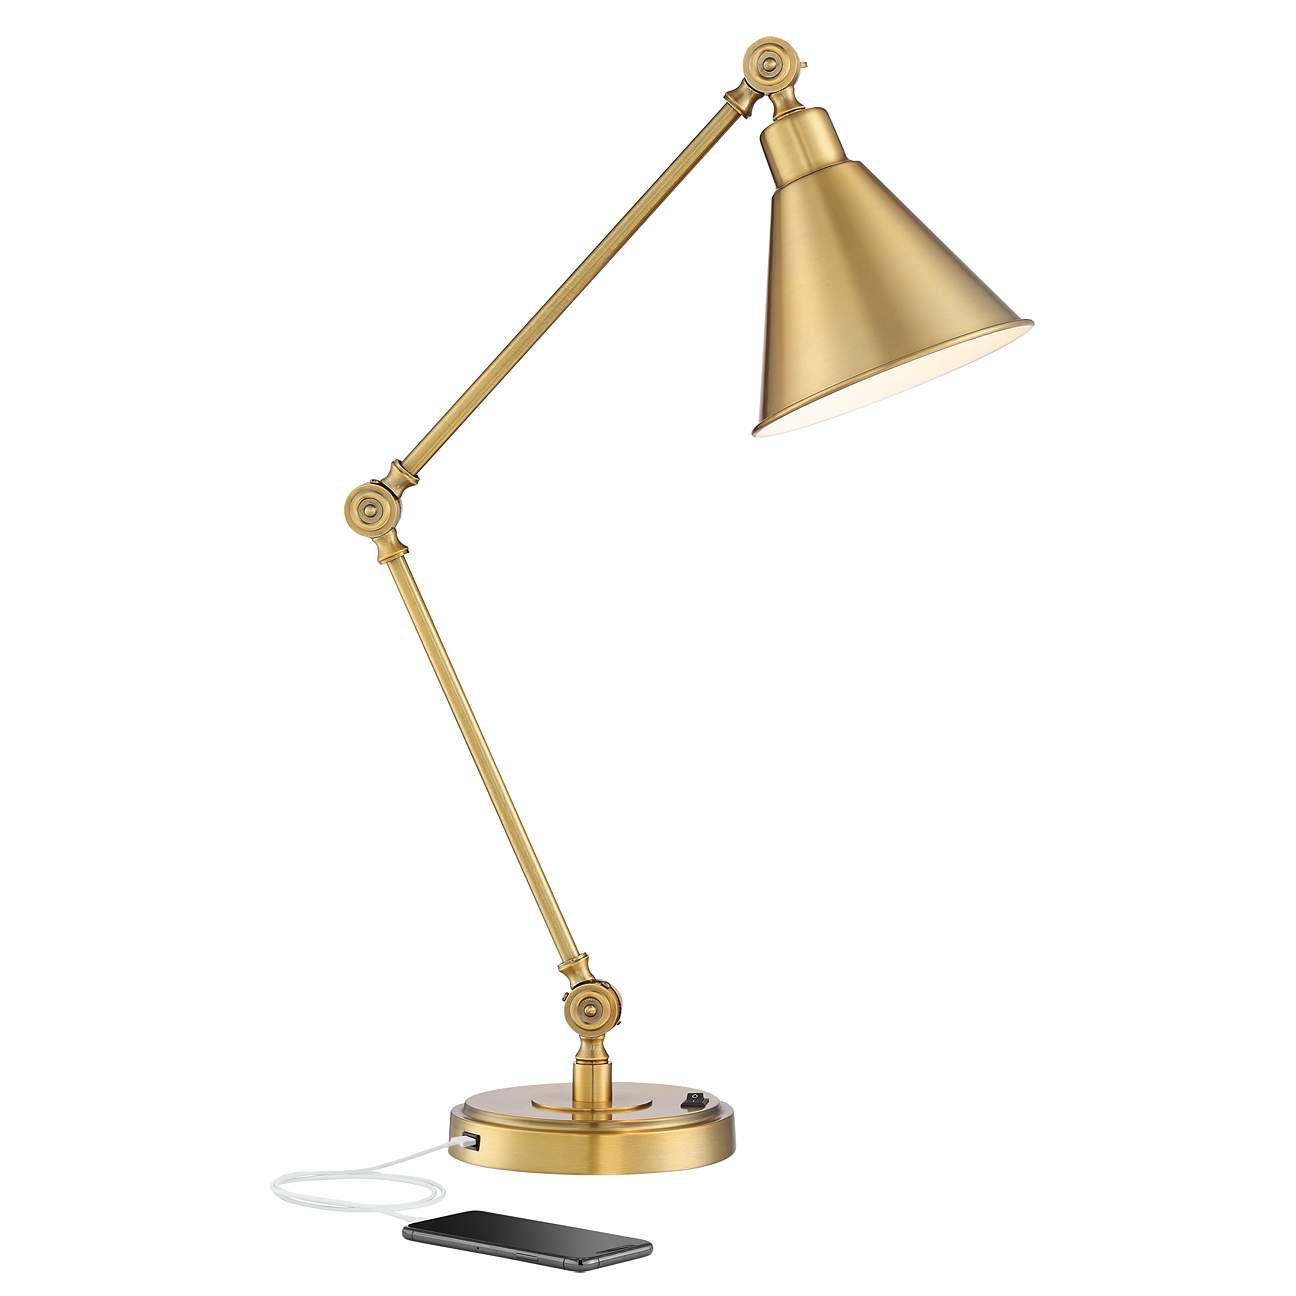 Wray Warm Antique Brass Desk Lamp with USB Port | LampsPlus.com